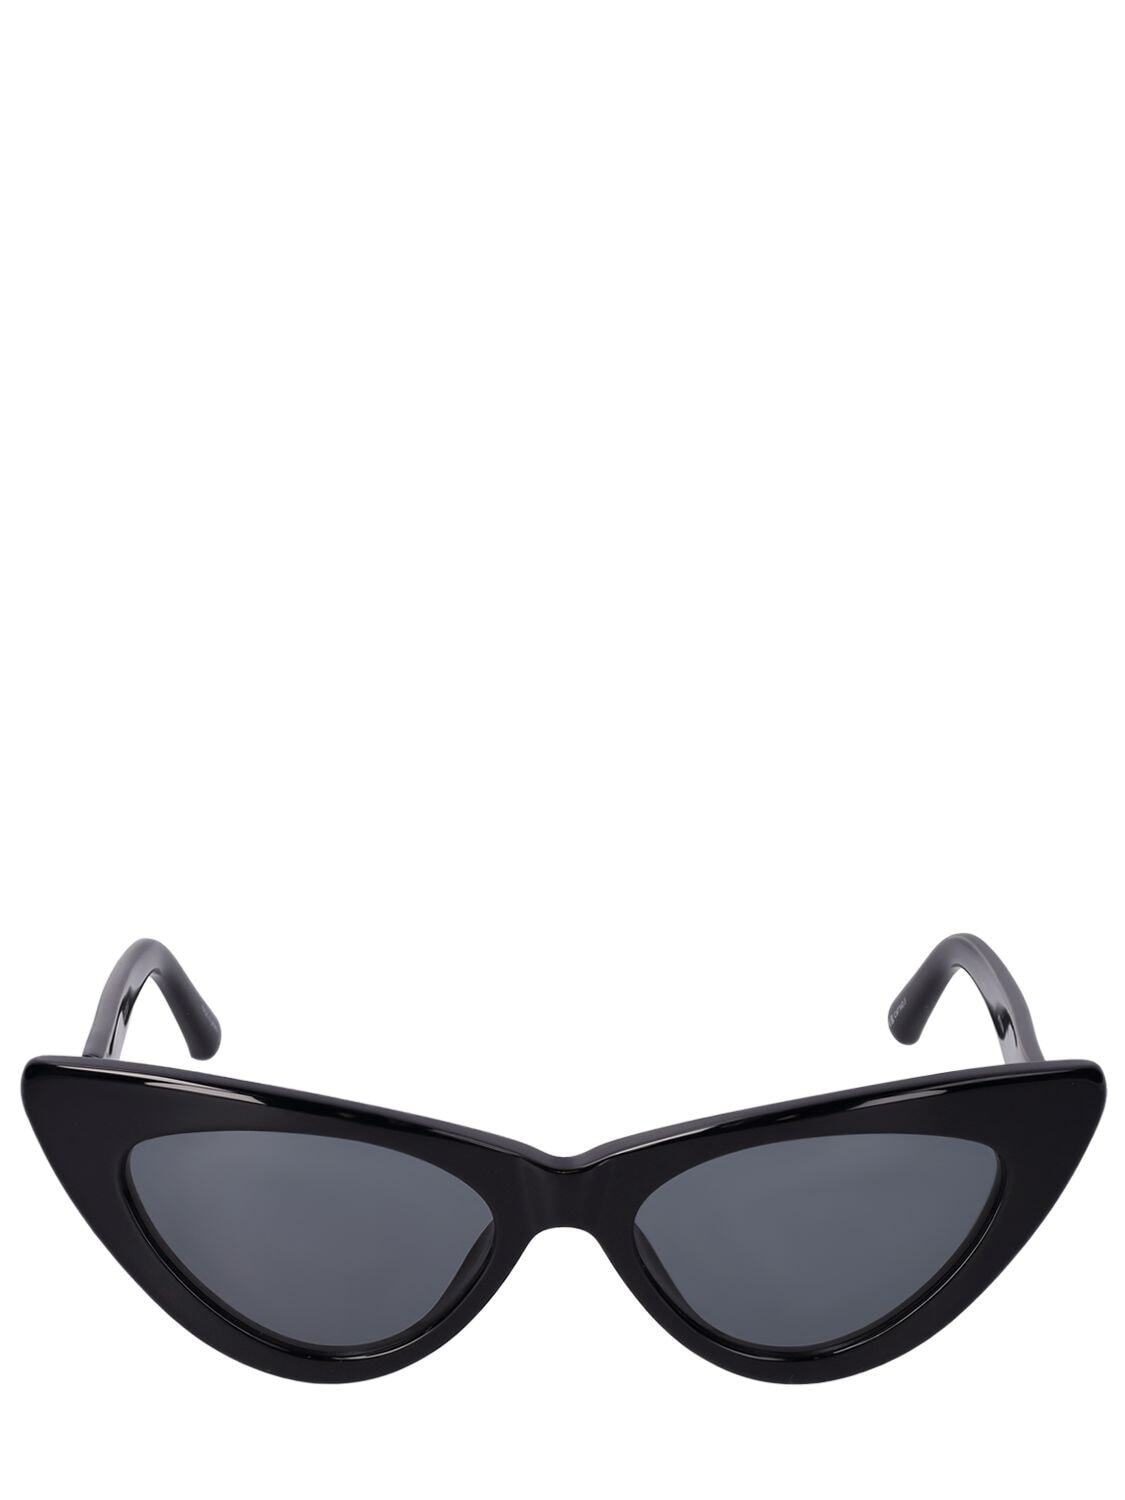 THE ATTICO Dora Cat-eye Bio Acetate Sunglasses in black / grey